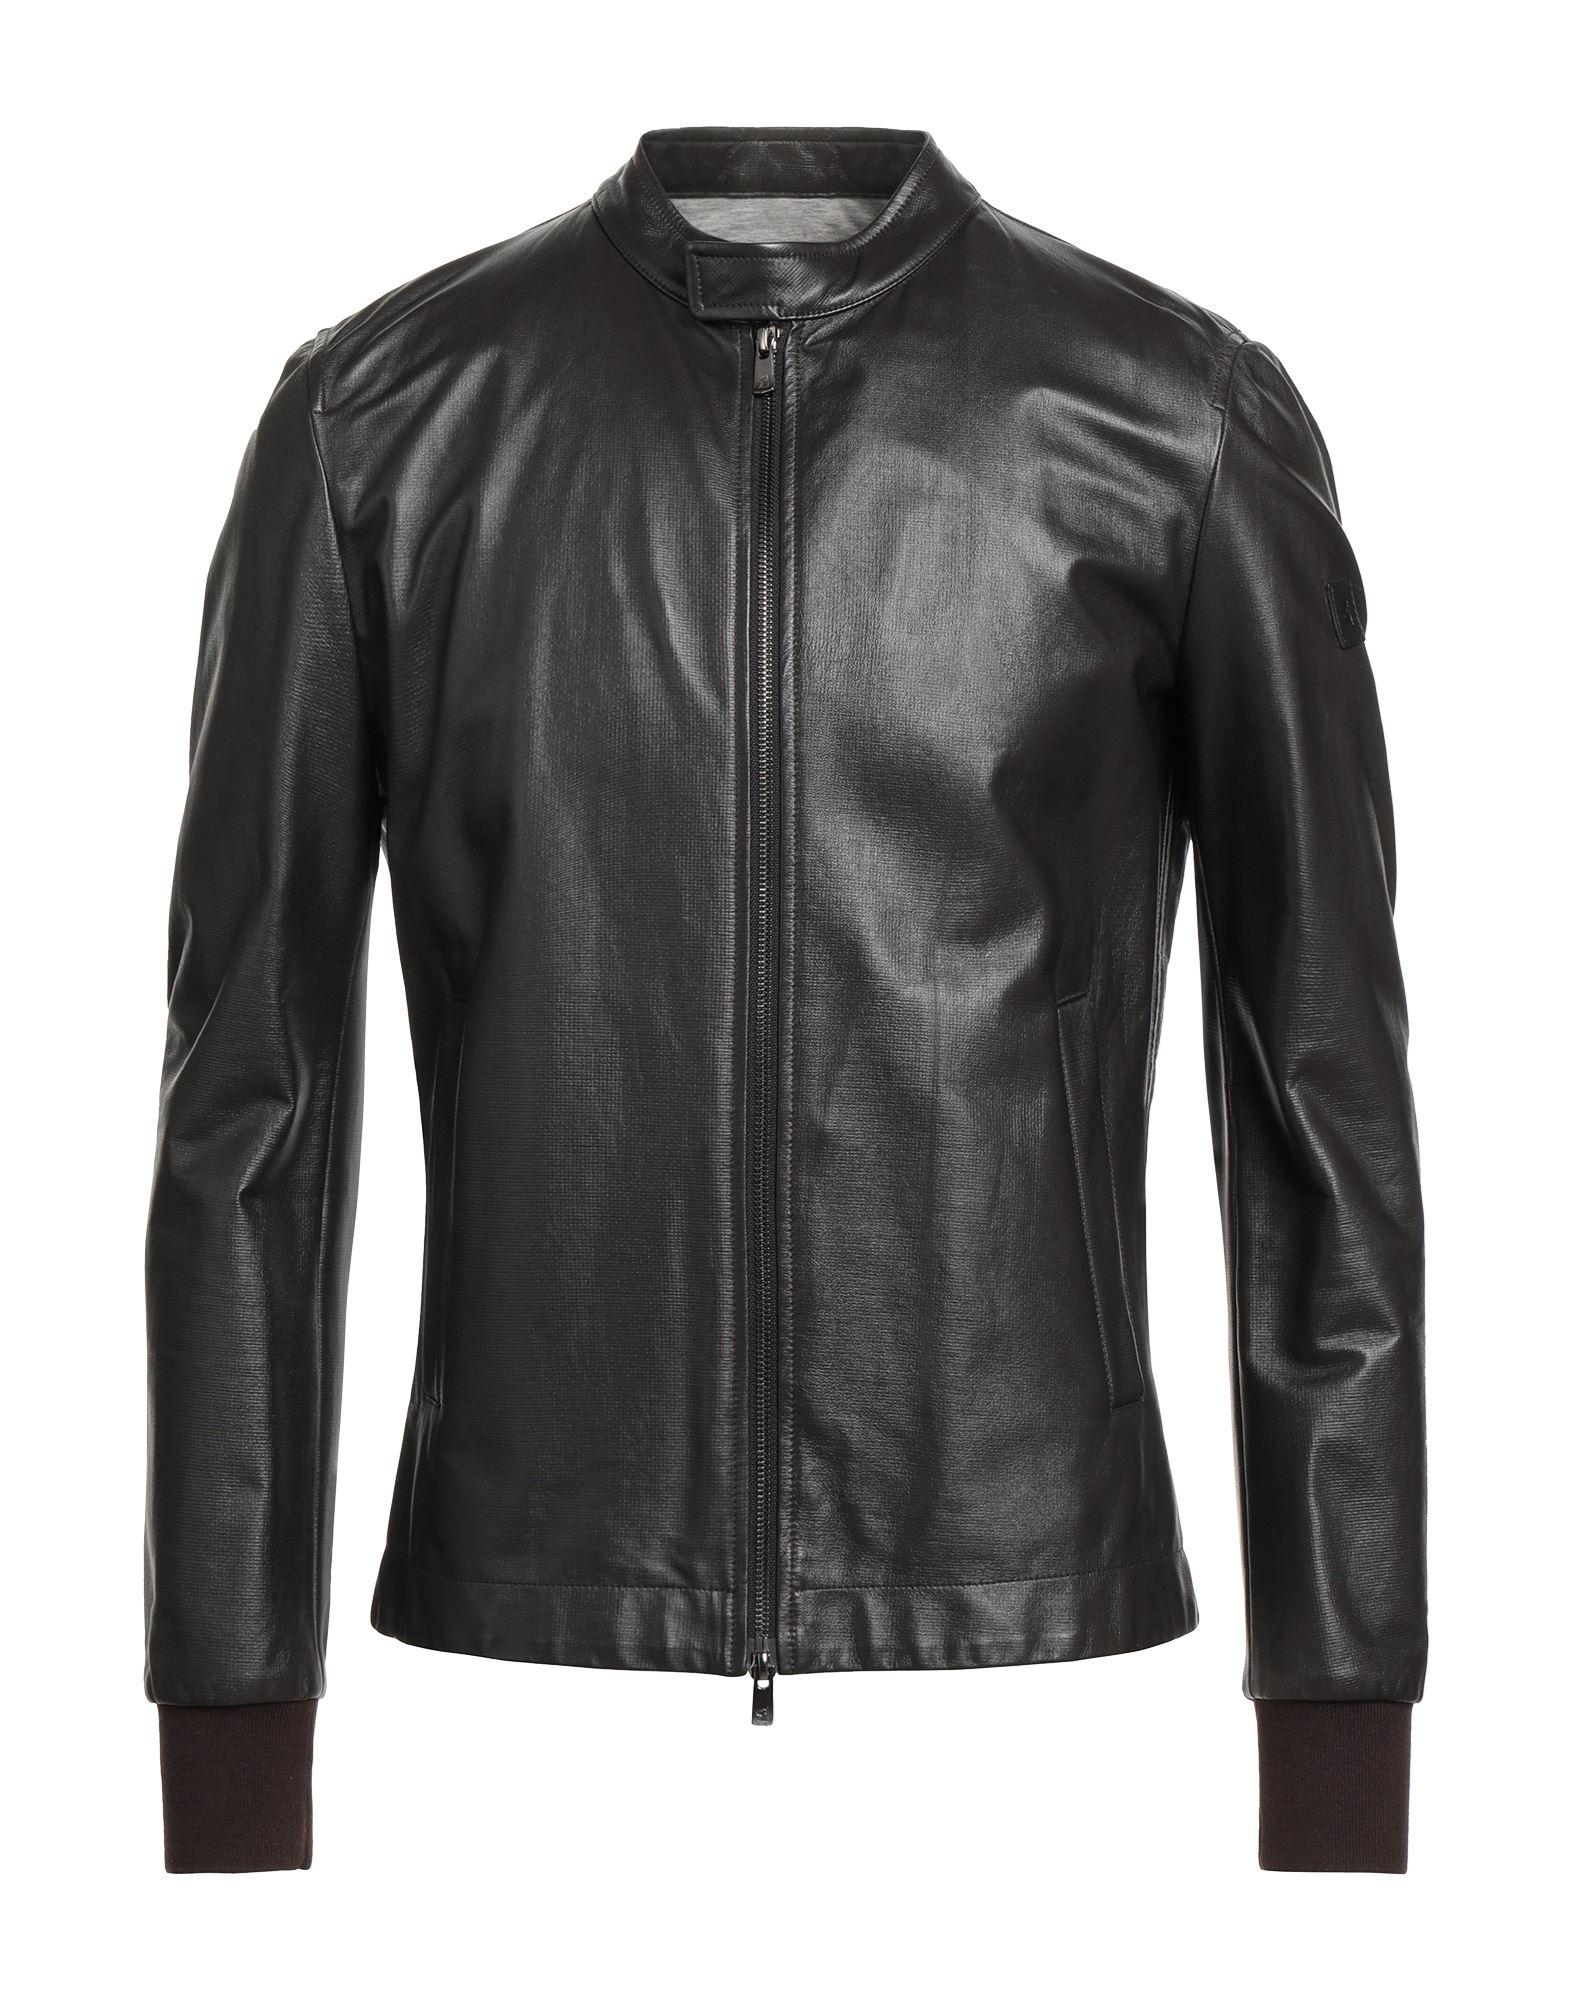 Montecore Leather Jacket in Dark Brown (Brown) for Men | Lyst